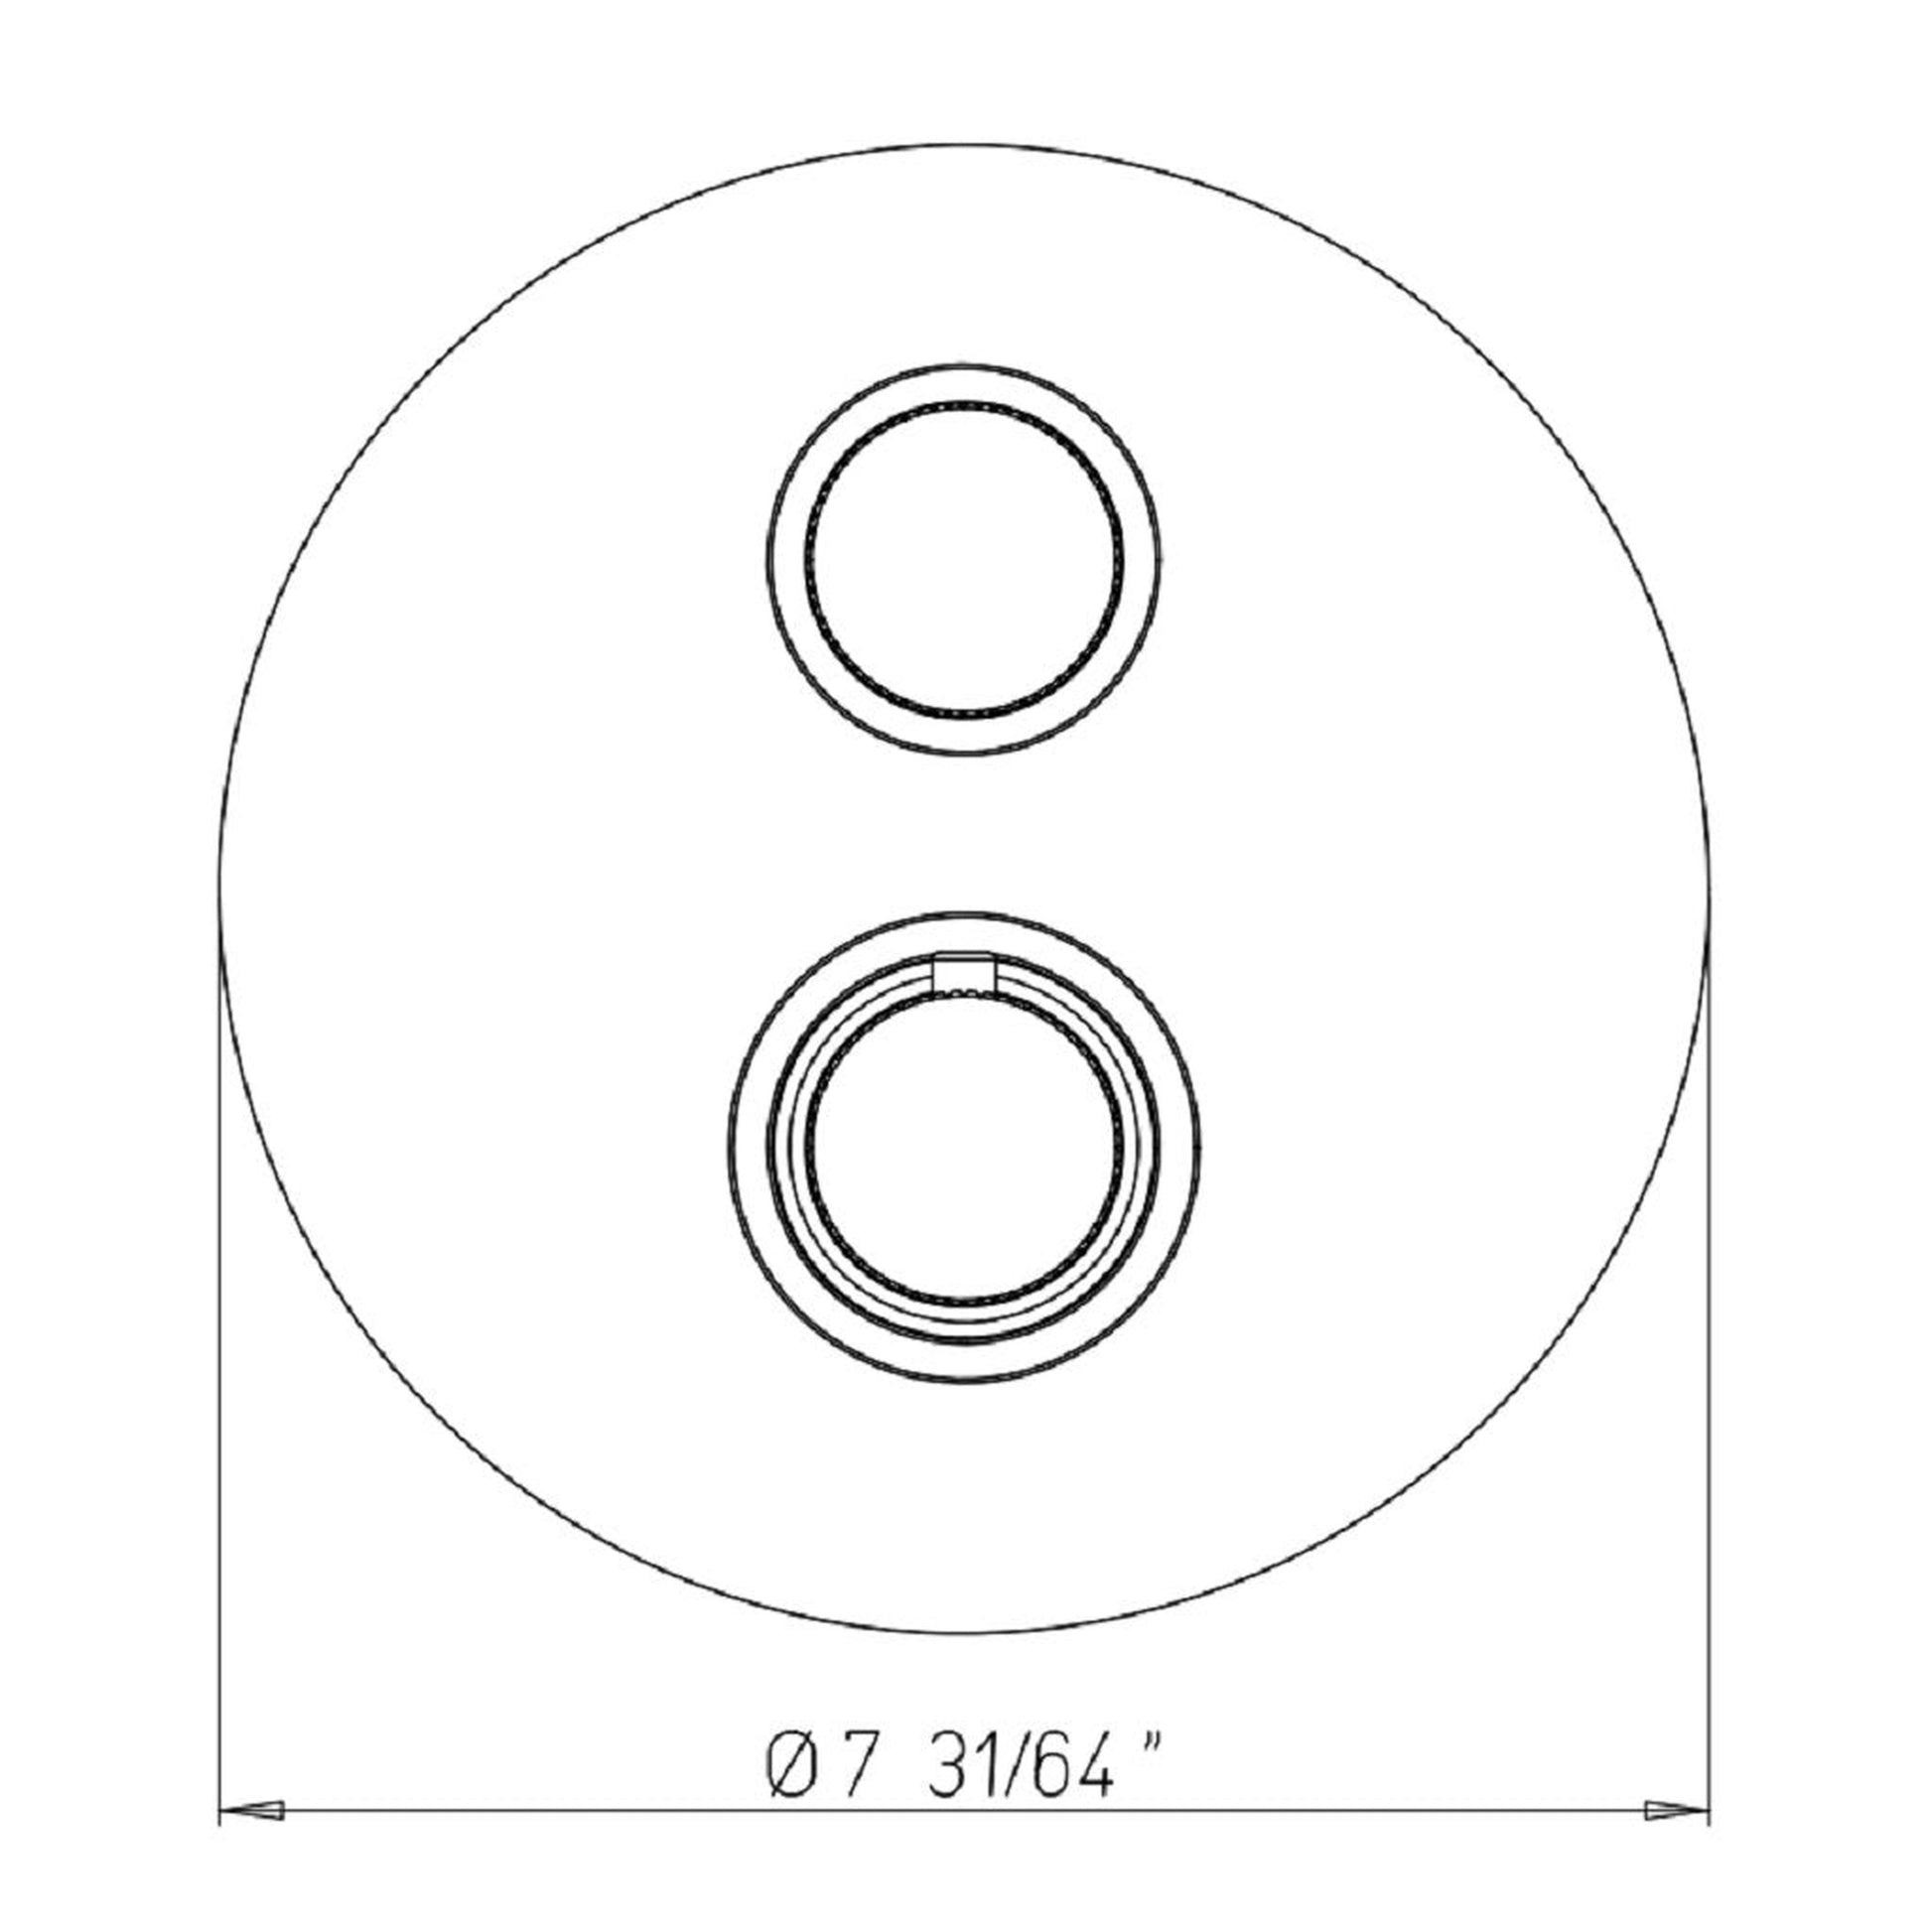 LaToscana Alessandra Chrome Thermostatic Trim With 3/4" Ceramic Disc Volume Control